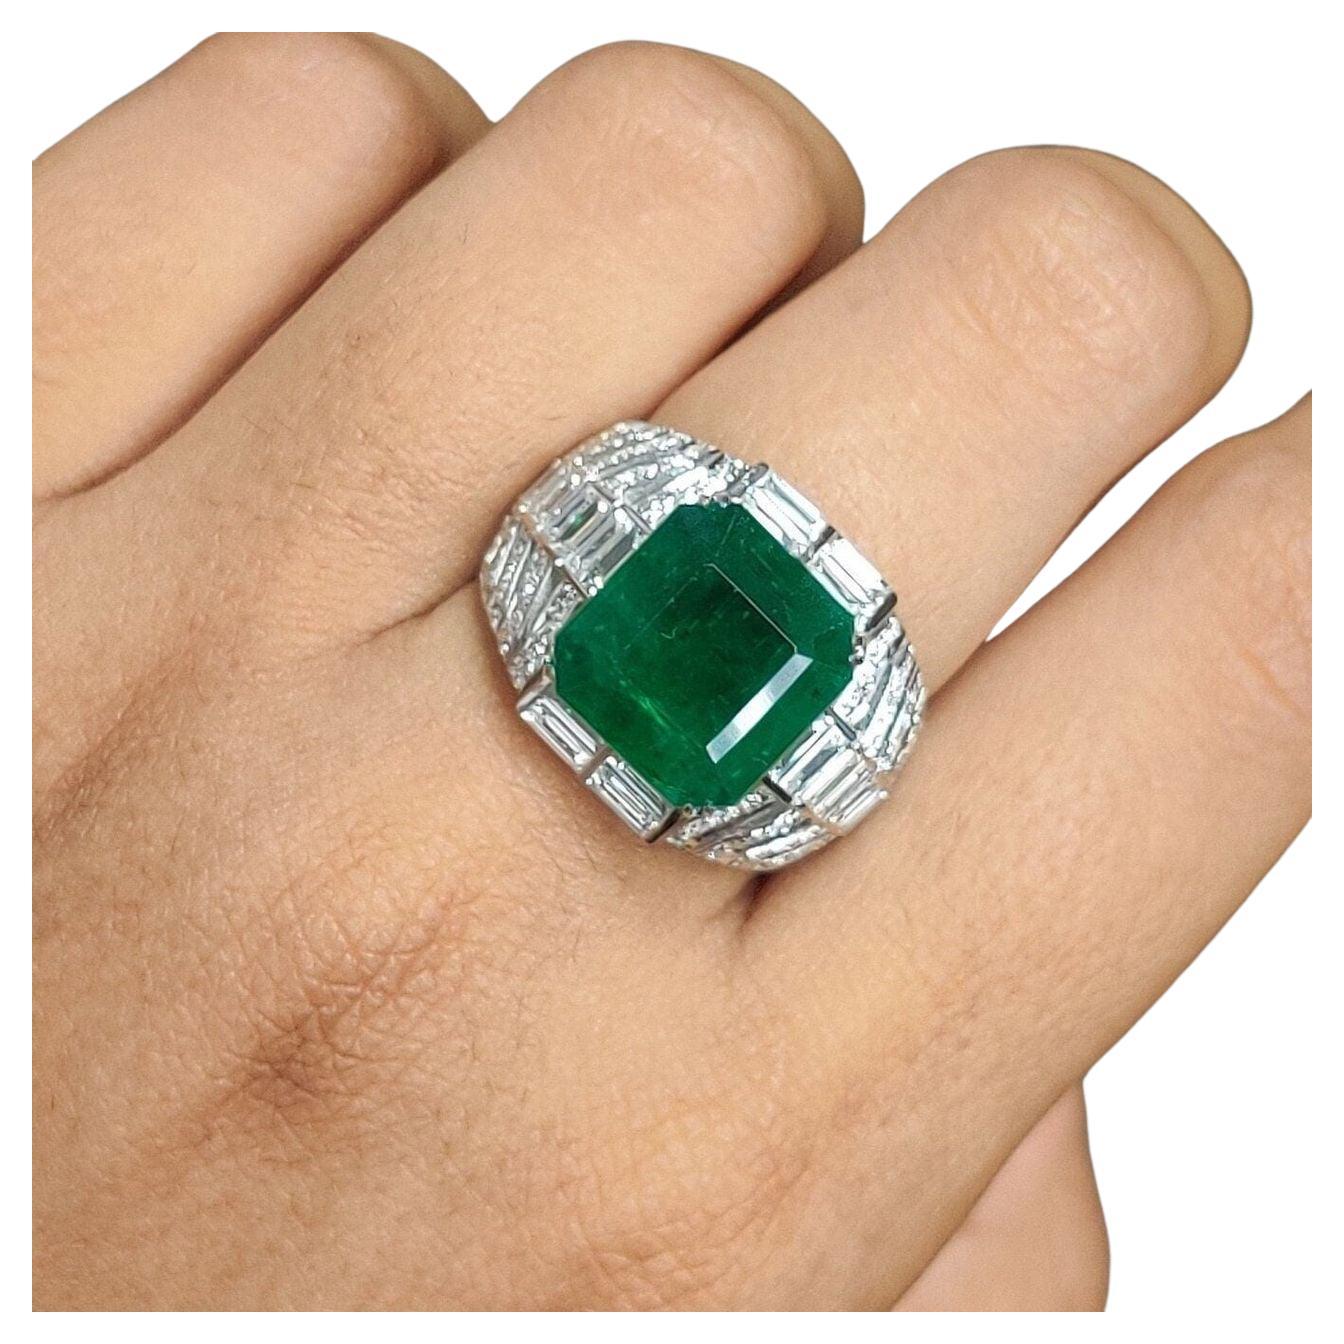 Emerald Cut Certified 5.74 Carat Zambian Green Emerald Diamond Ring  For Sale